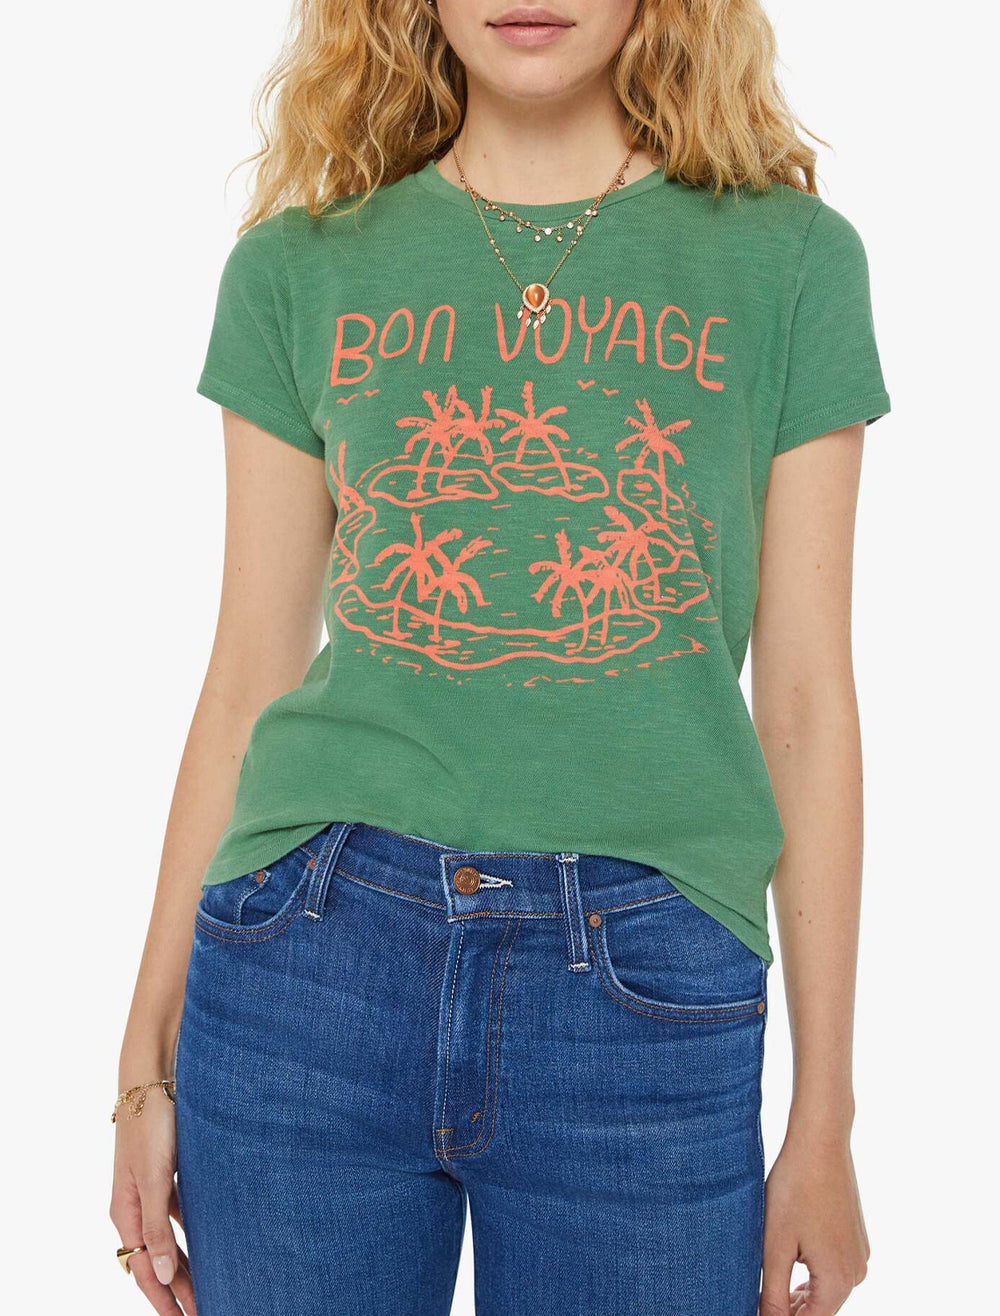 model wearing the lil sinful in bon voyage